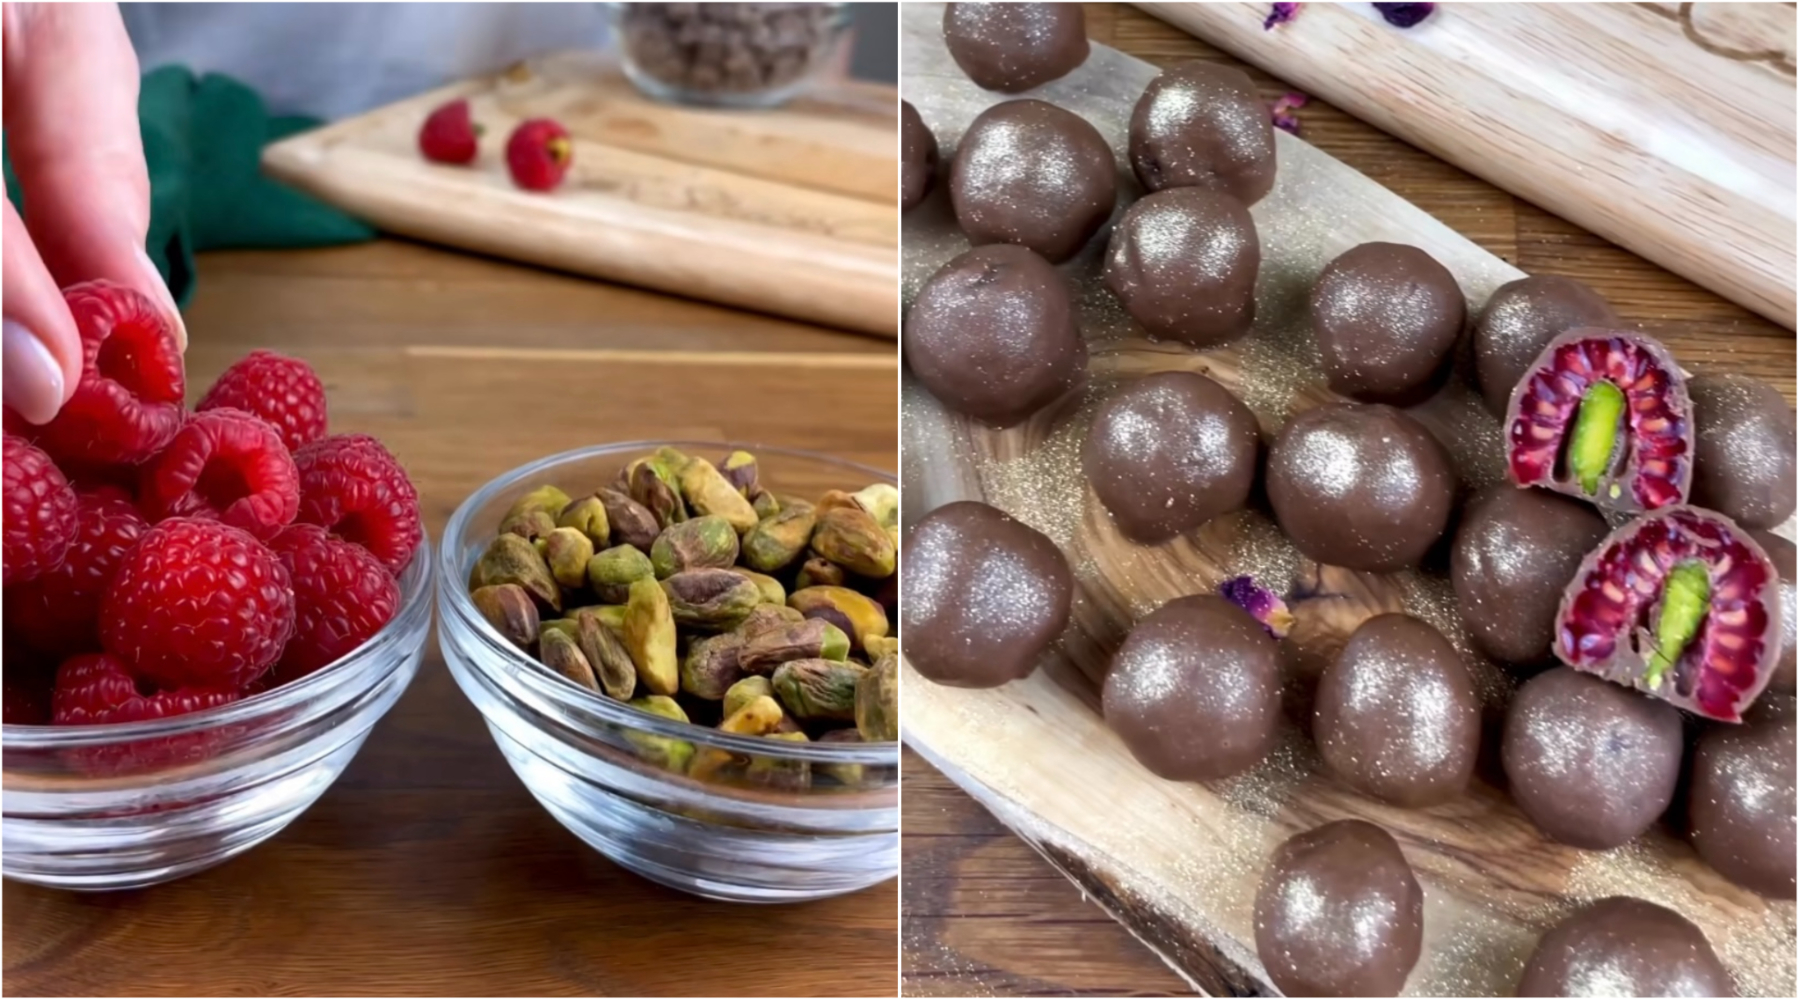 Snack time: Čokoladne maline sa pistaćima